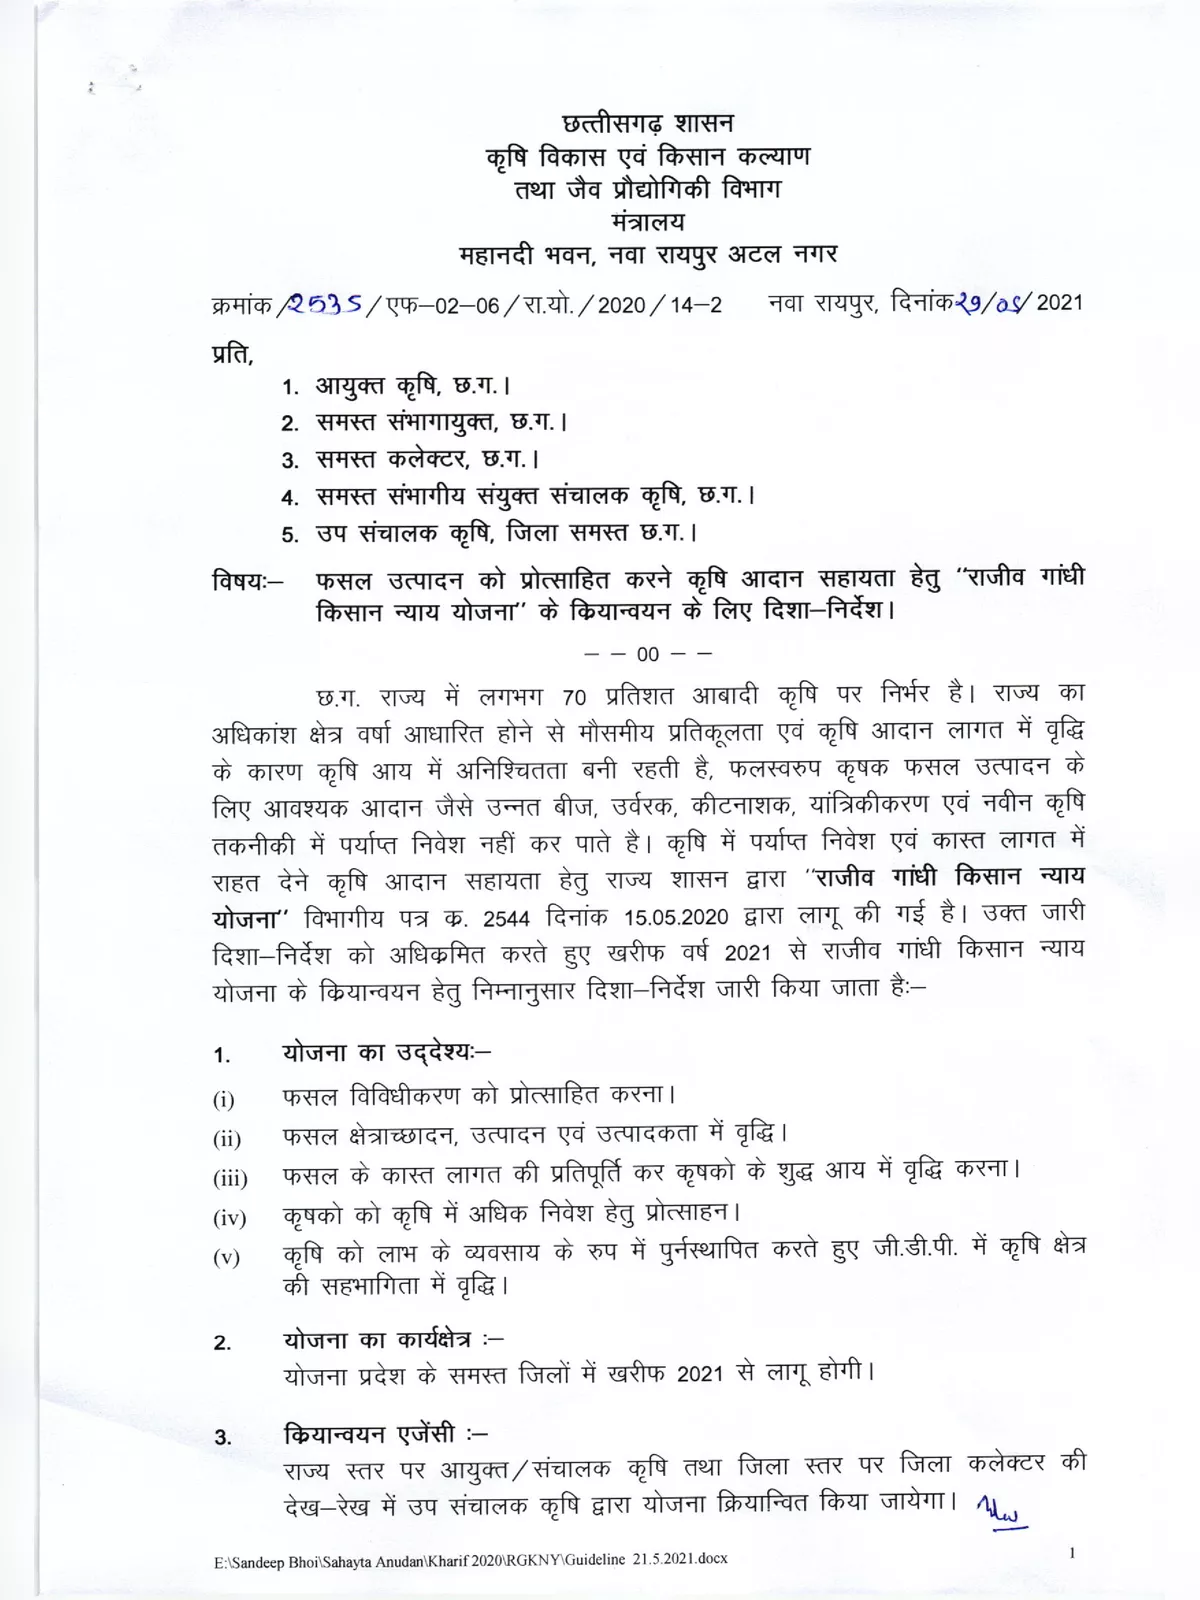 Rajiv Gandhi Bhumihin Nyay Yojana Details Chhattisgarh